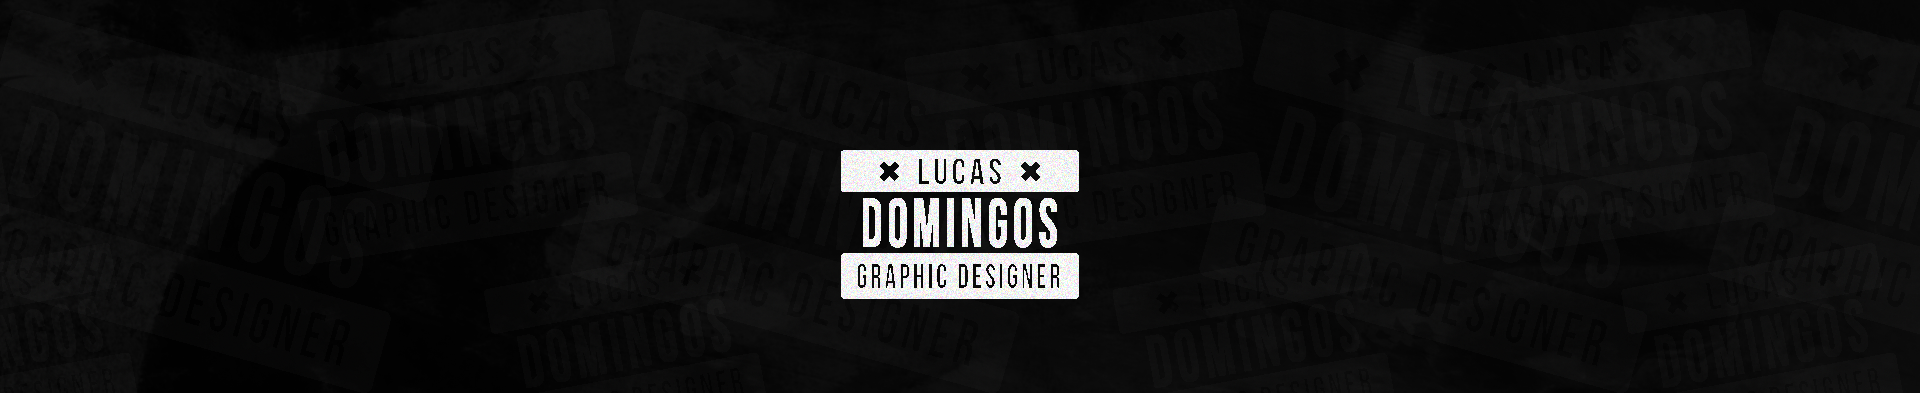 Lucas Domingos's profile banner